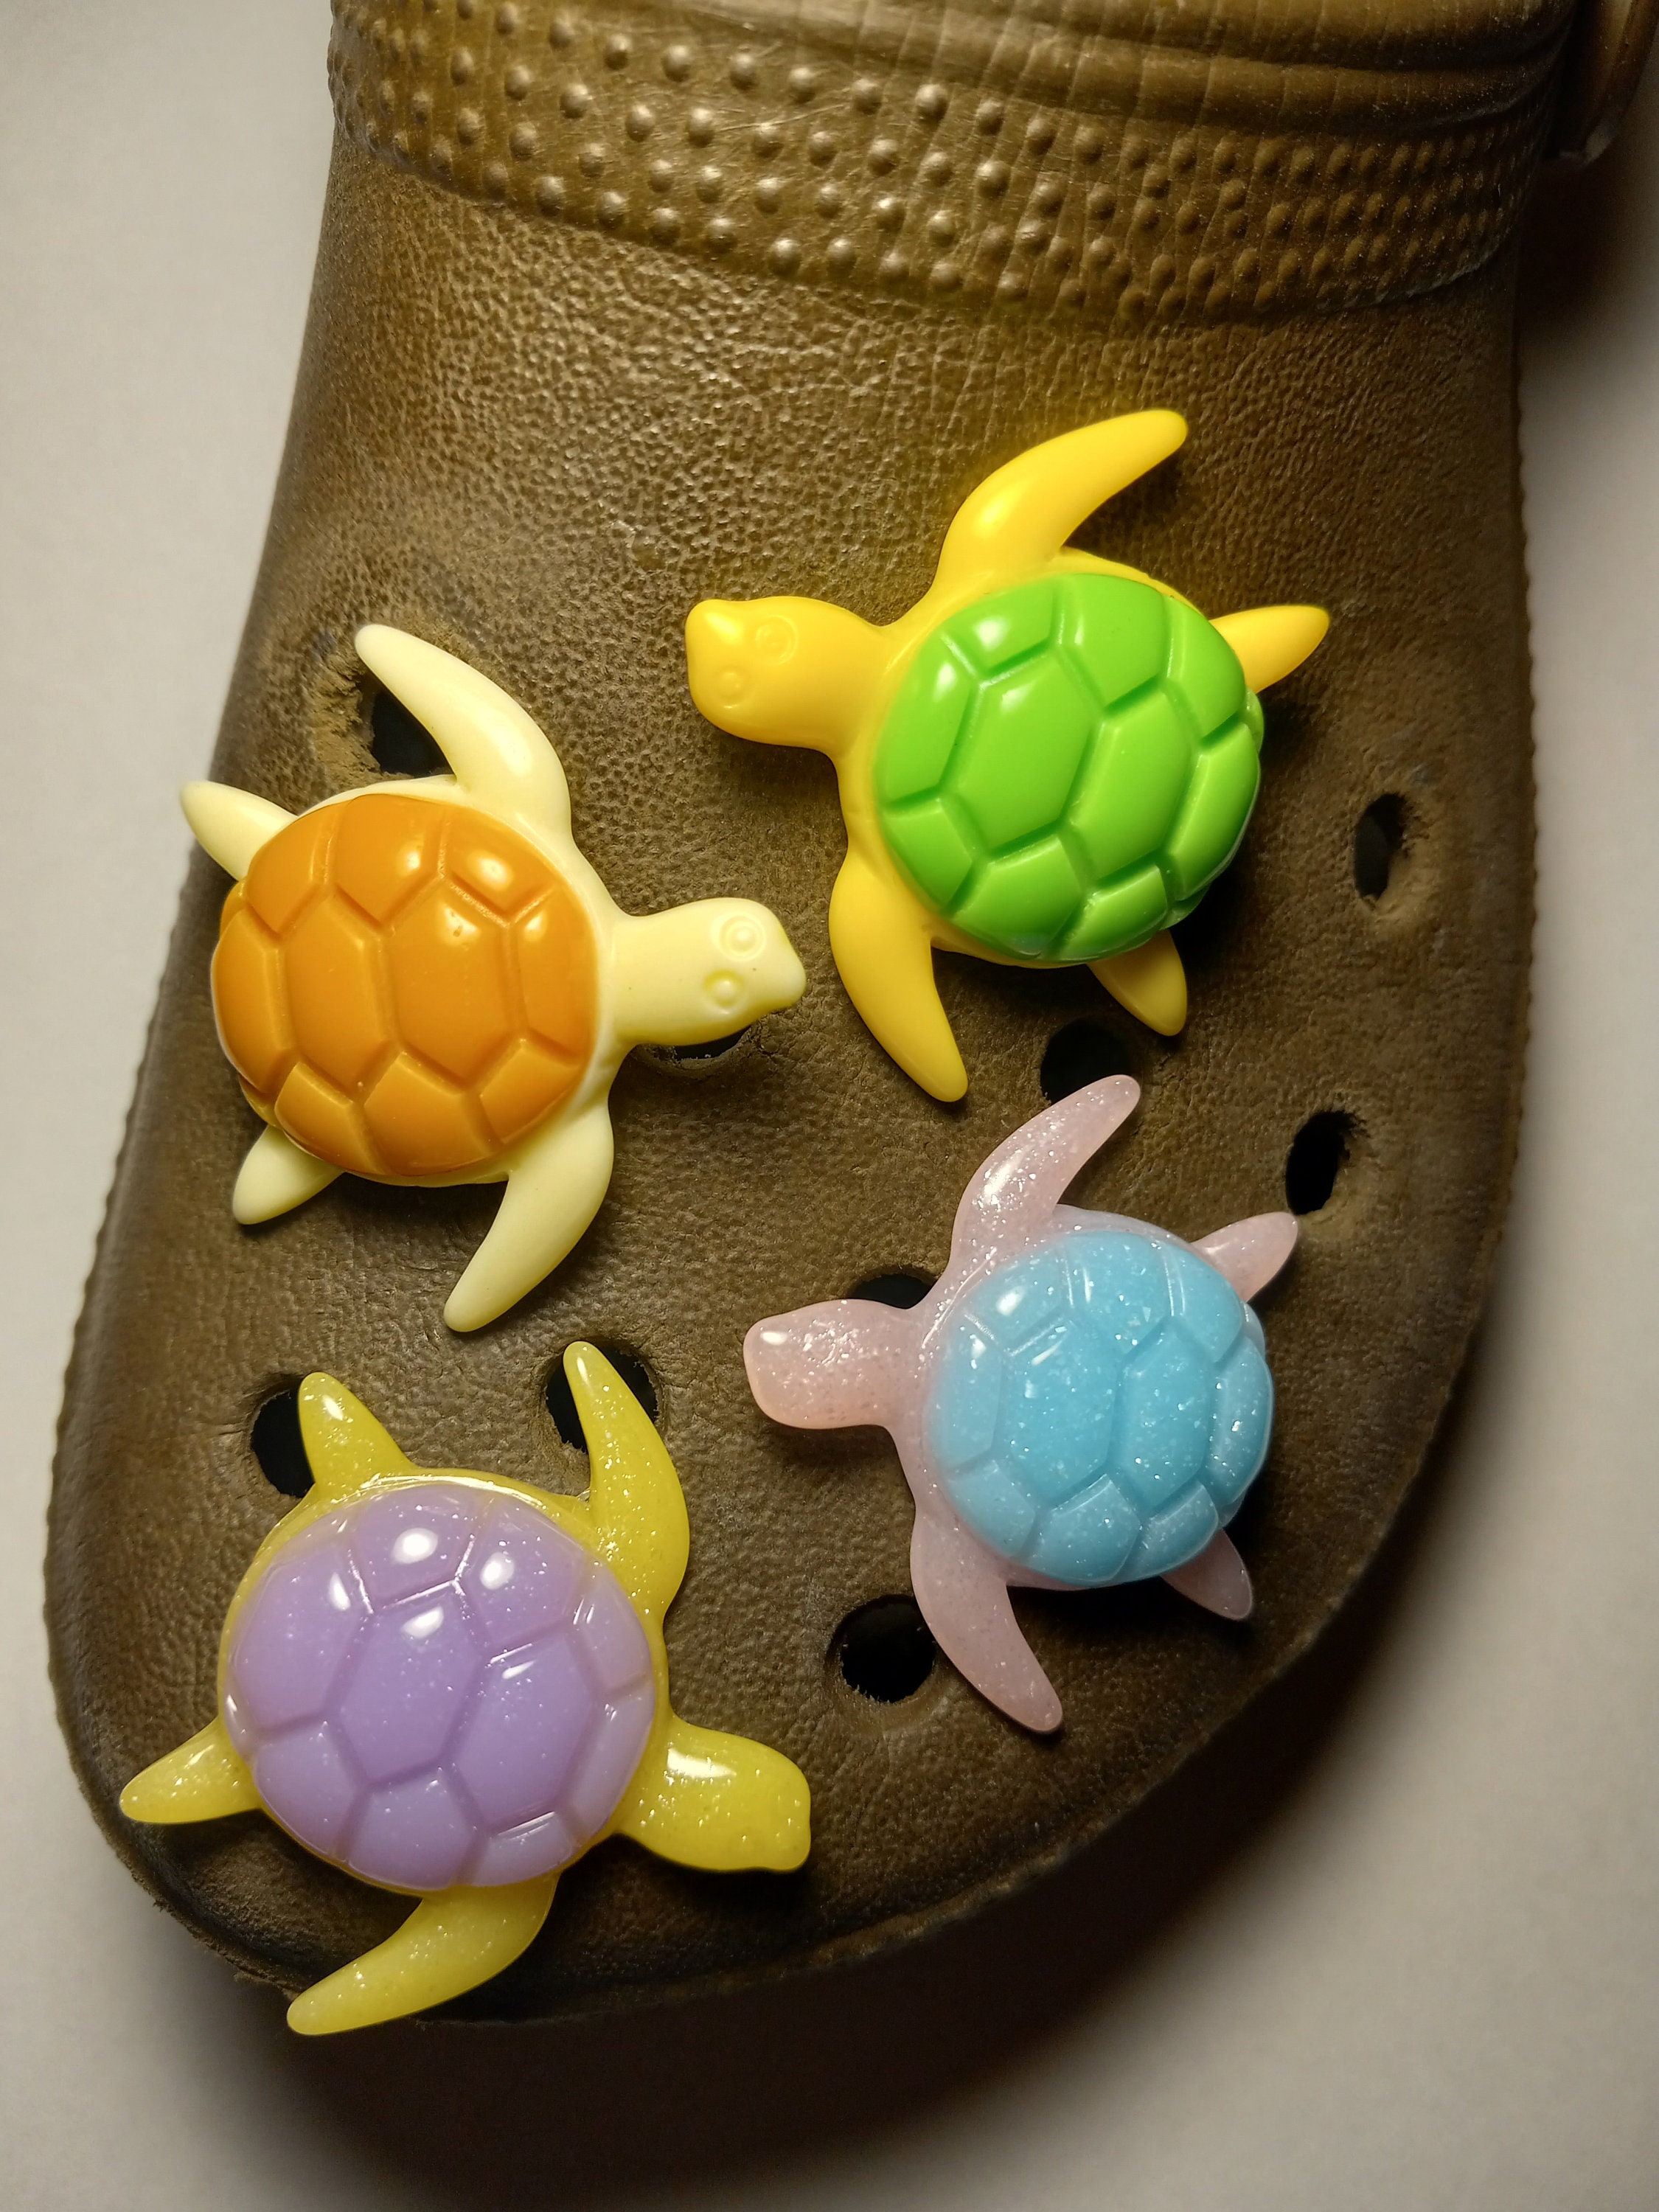 Brand New Jibbitz Croc Shoe Charm - Tortoise Print Plum